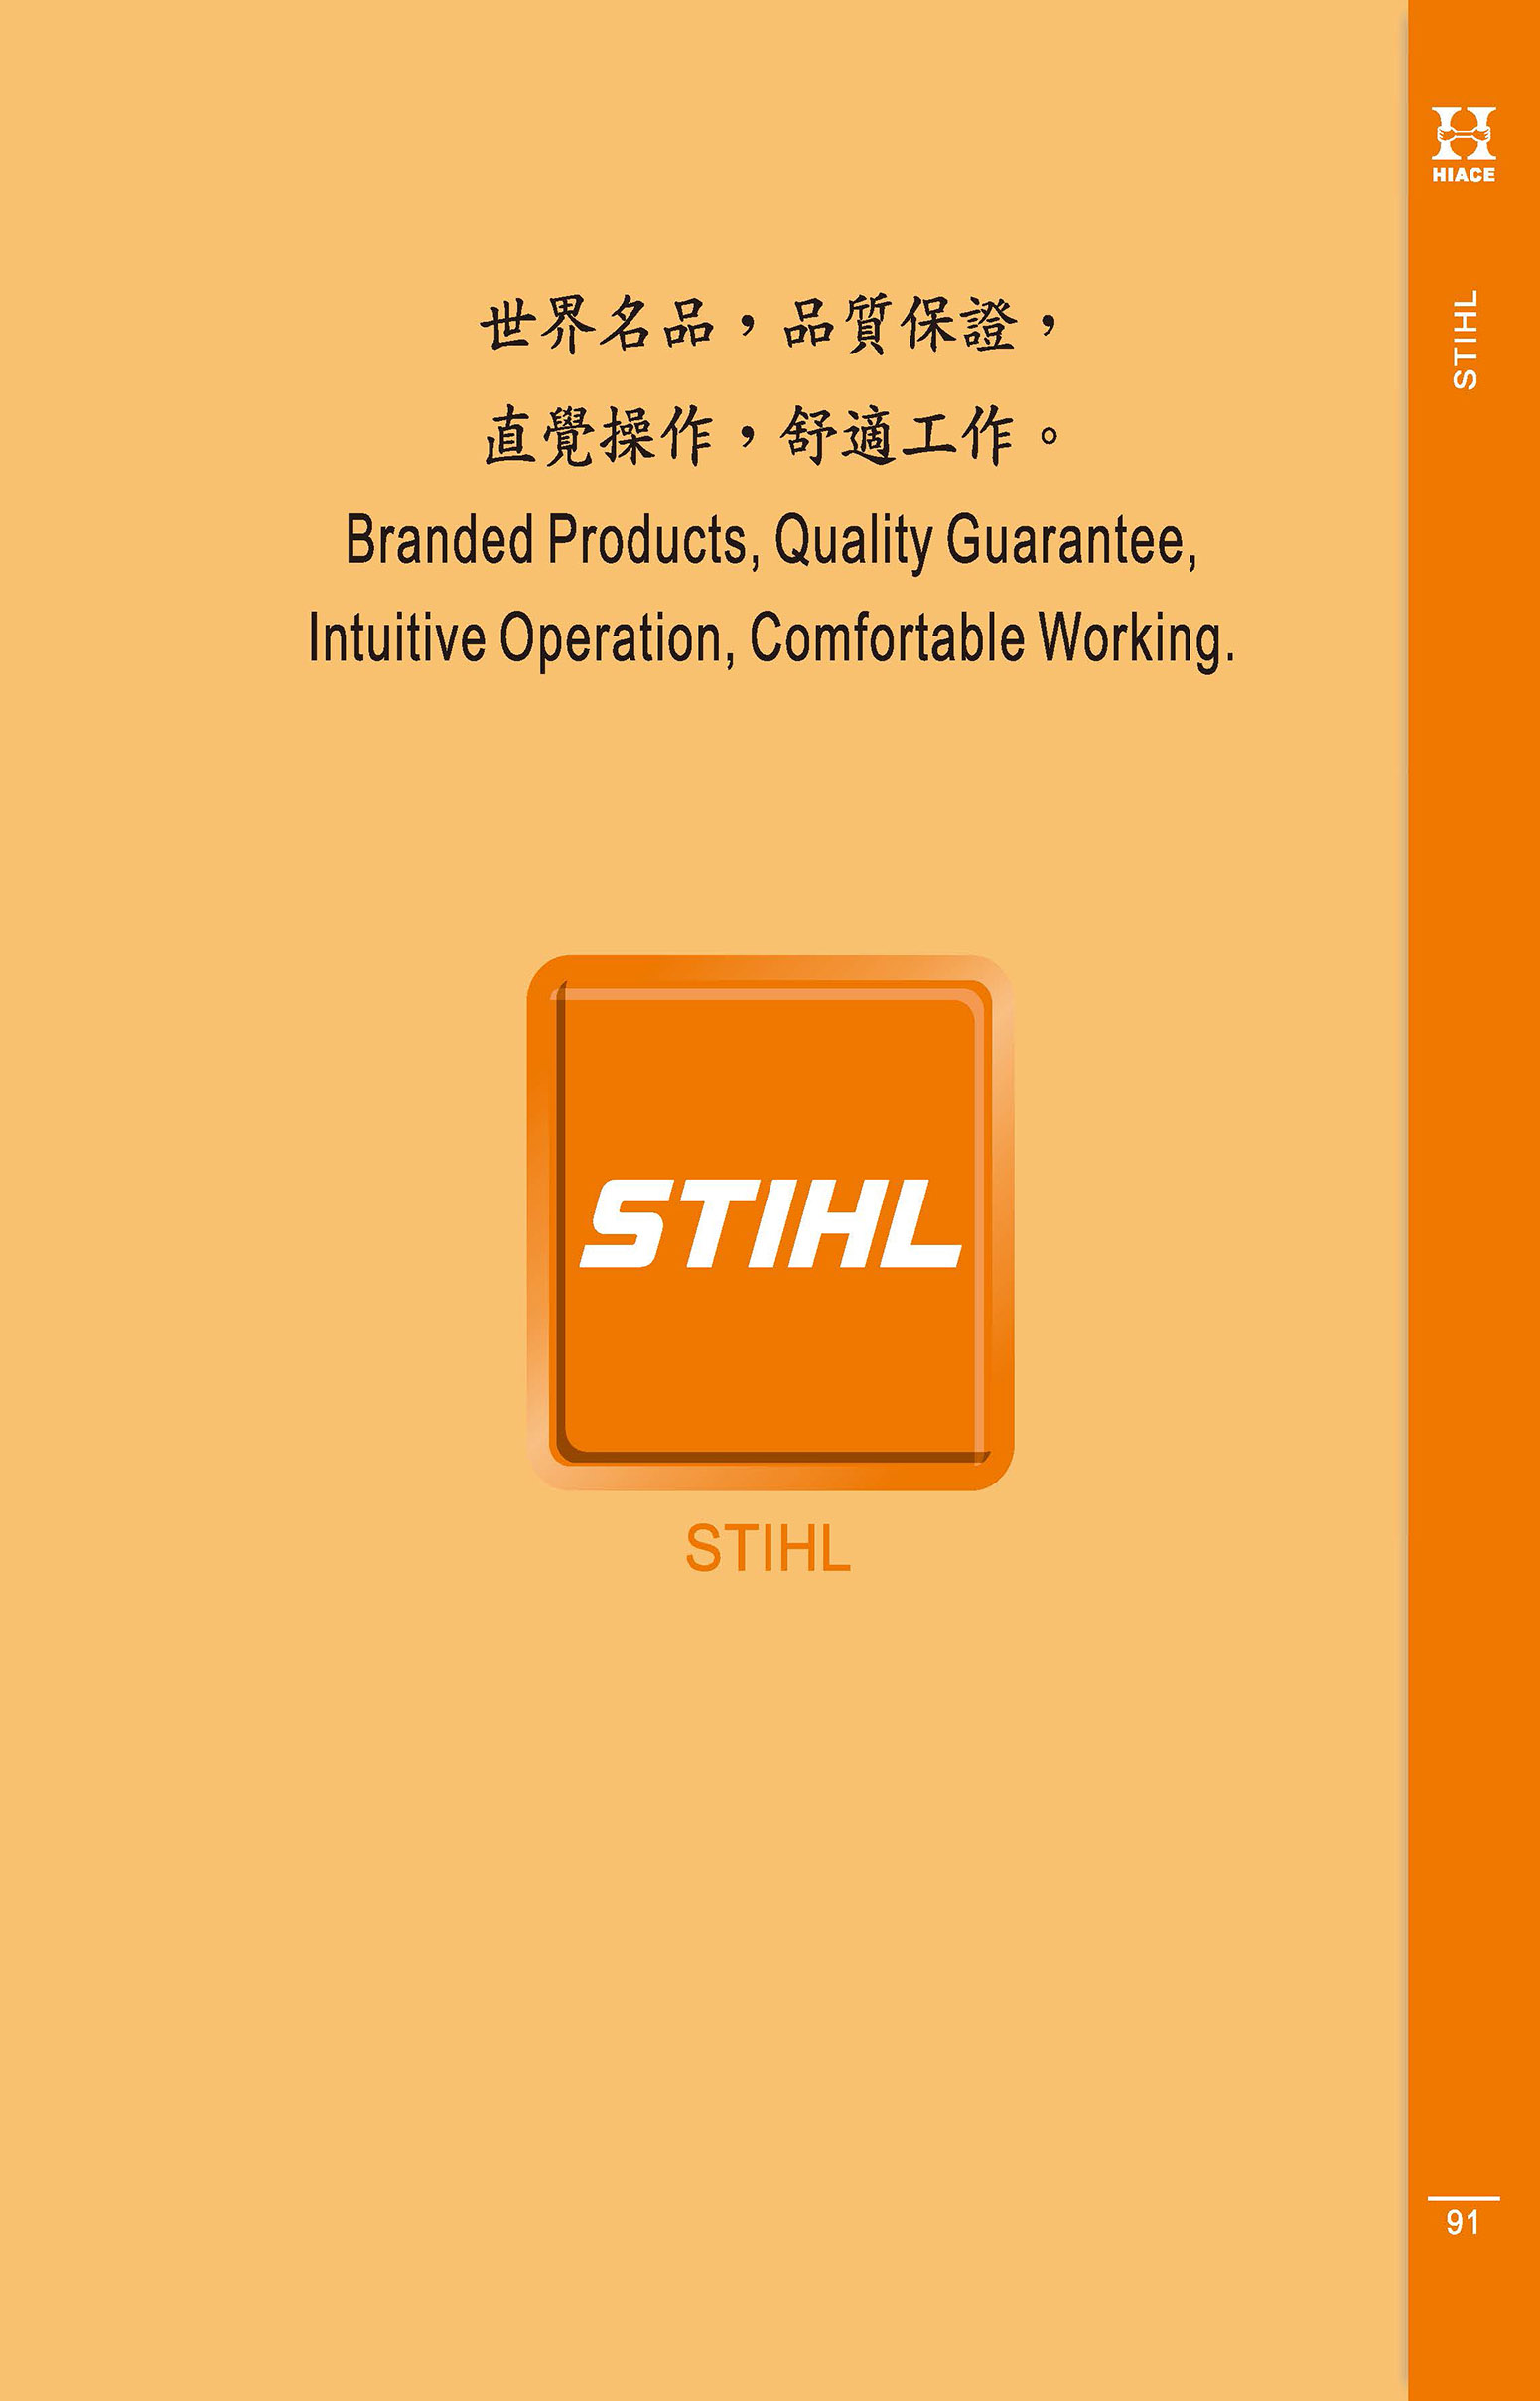 STIHL 系列產品-1